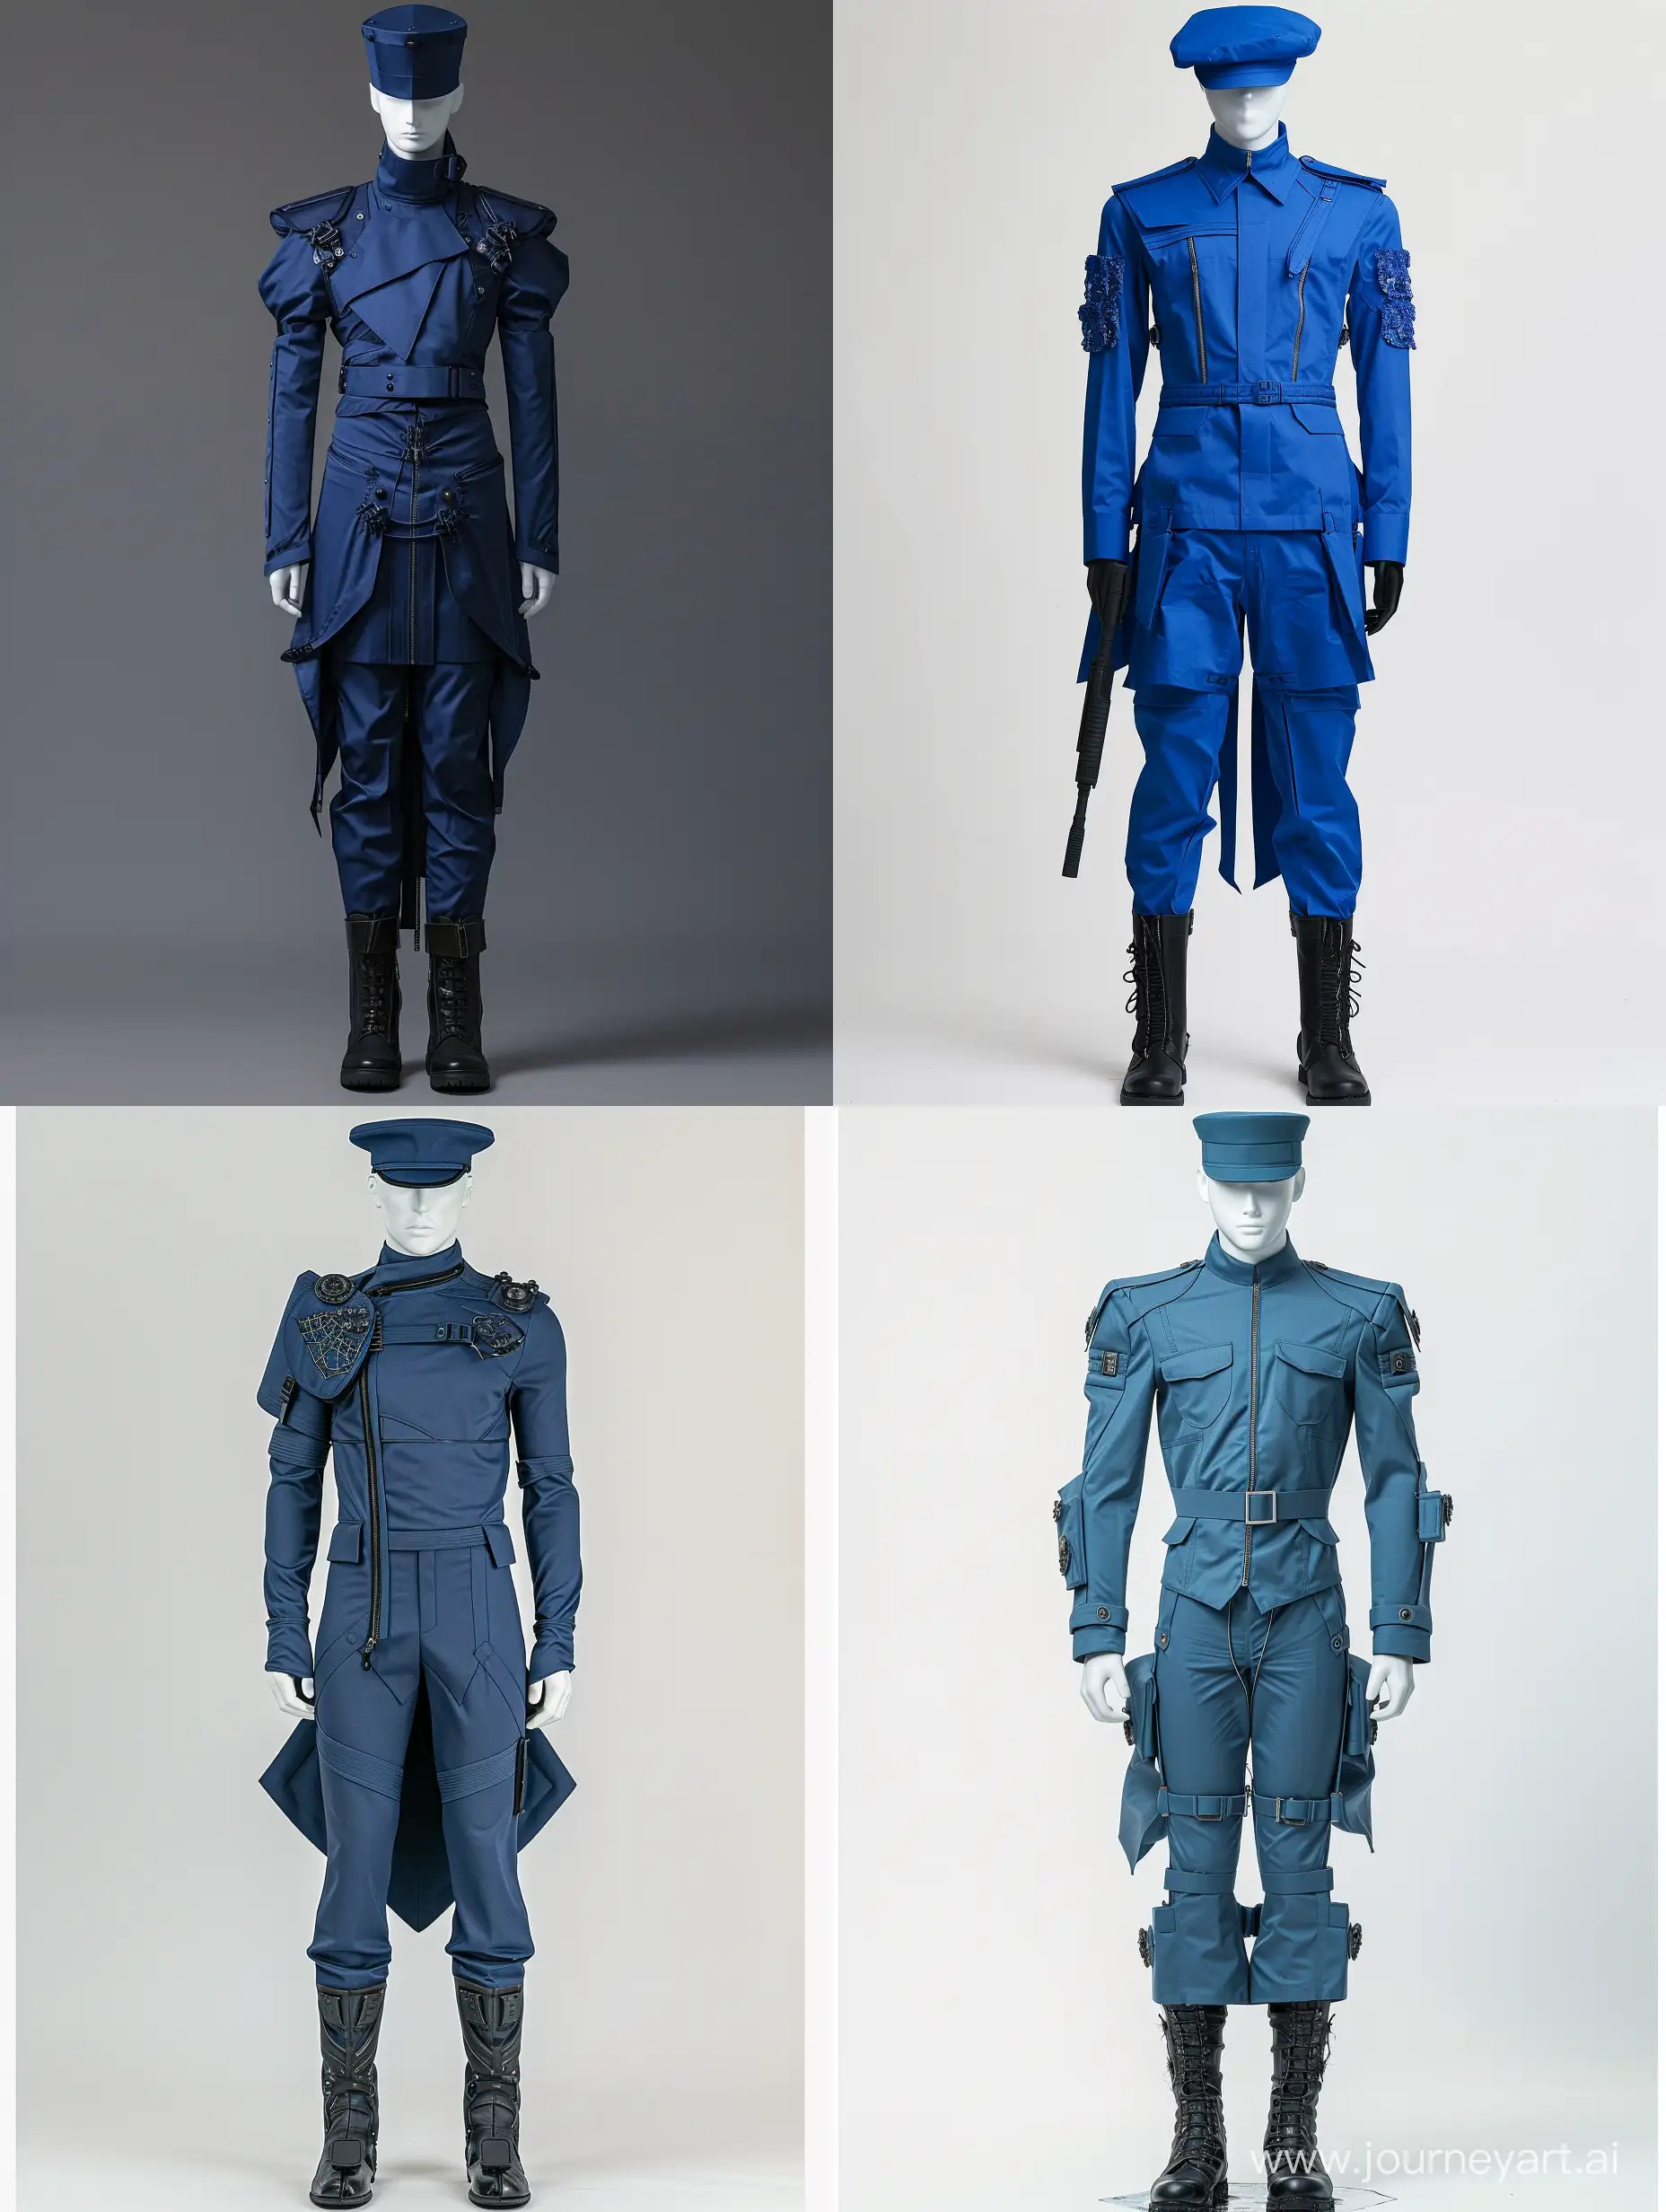 Retro-Futuristic-Cyberpunk-Male-Mannequin-in-Formal-Military-Blue-Uniform